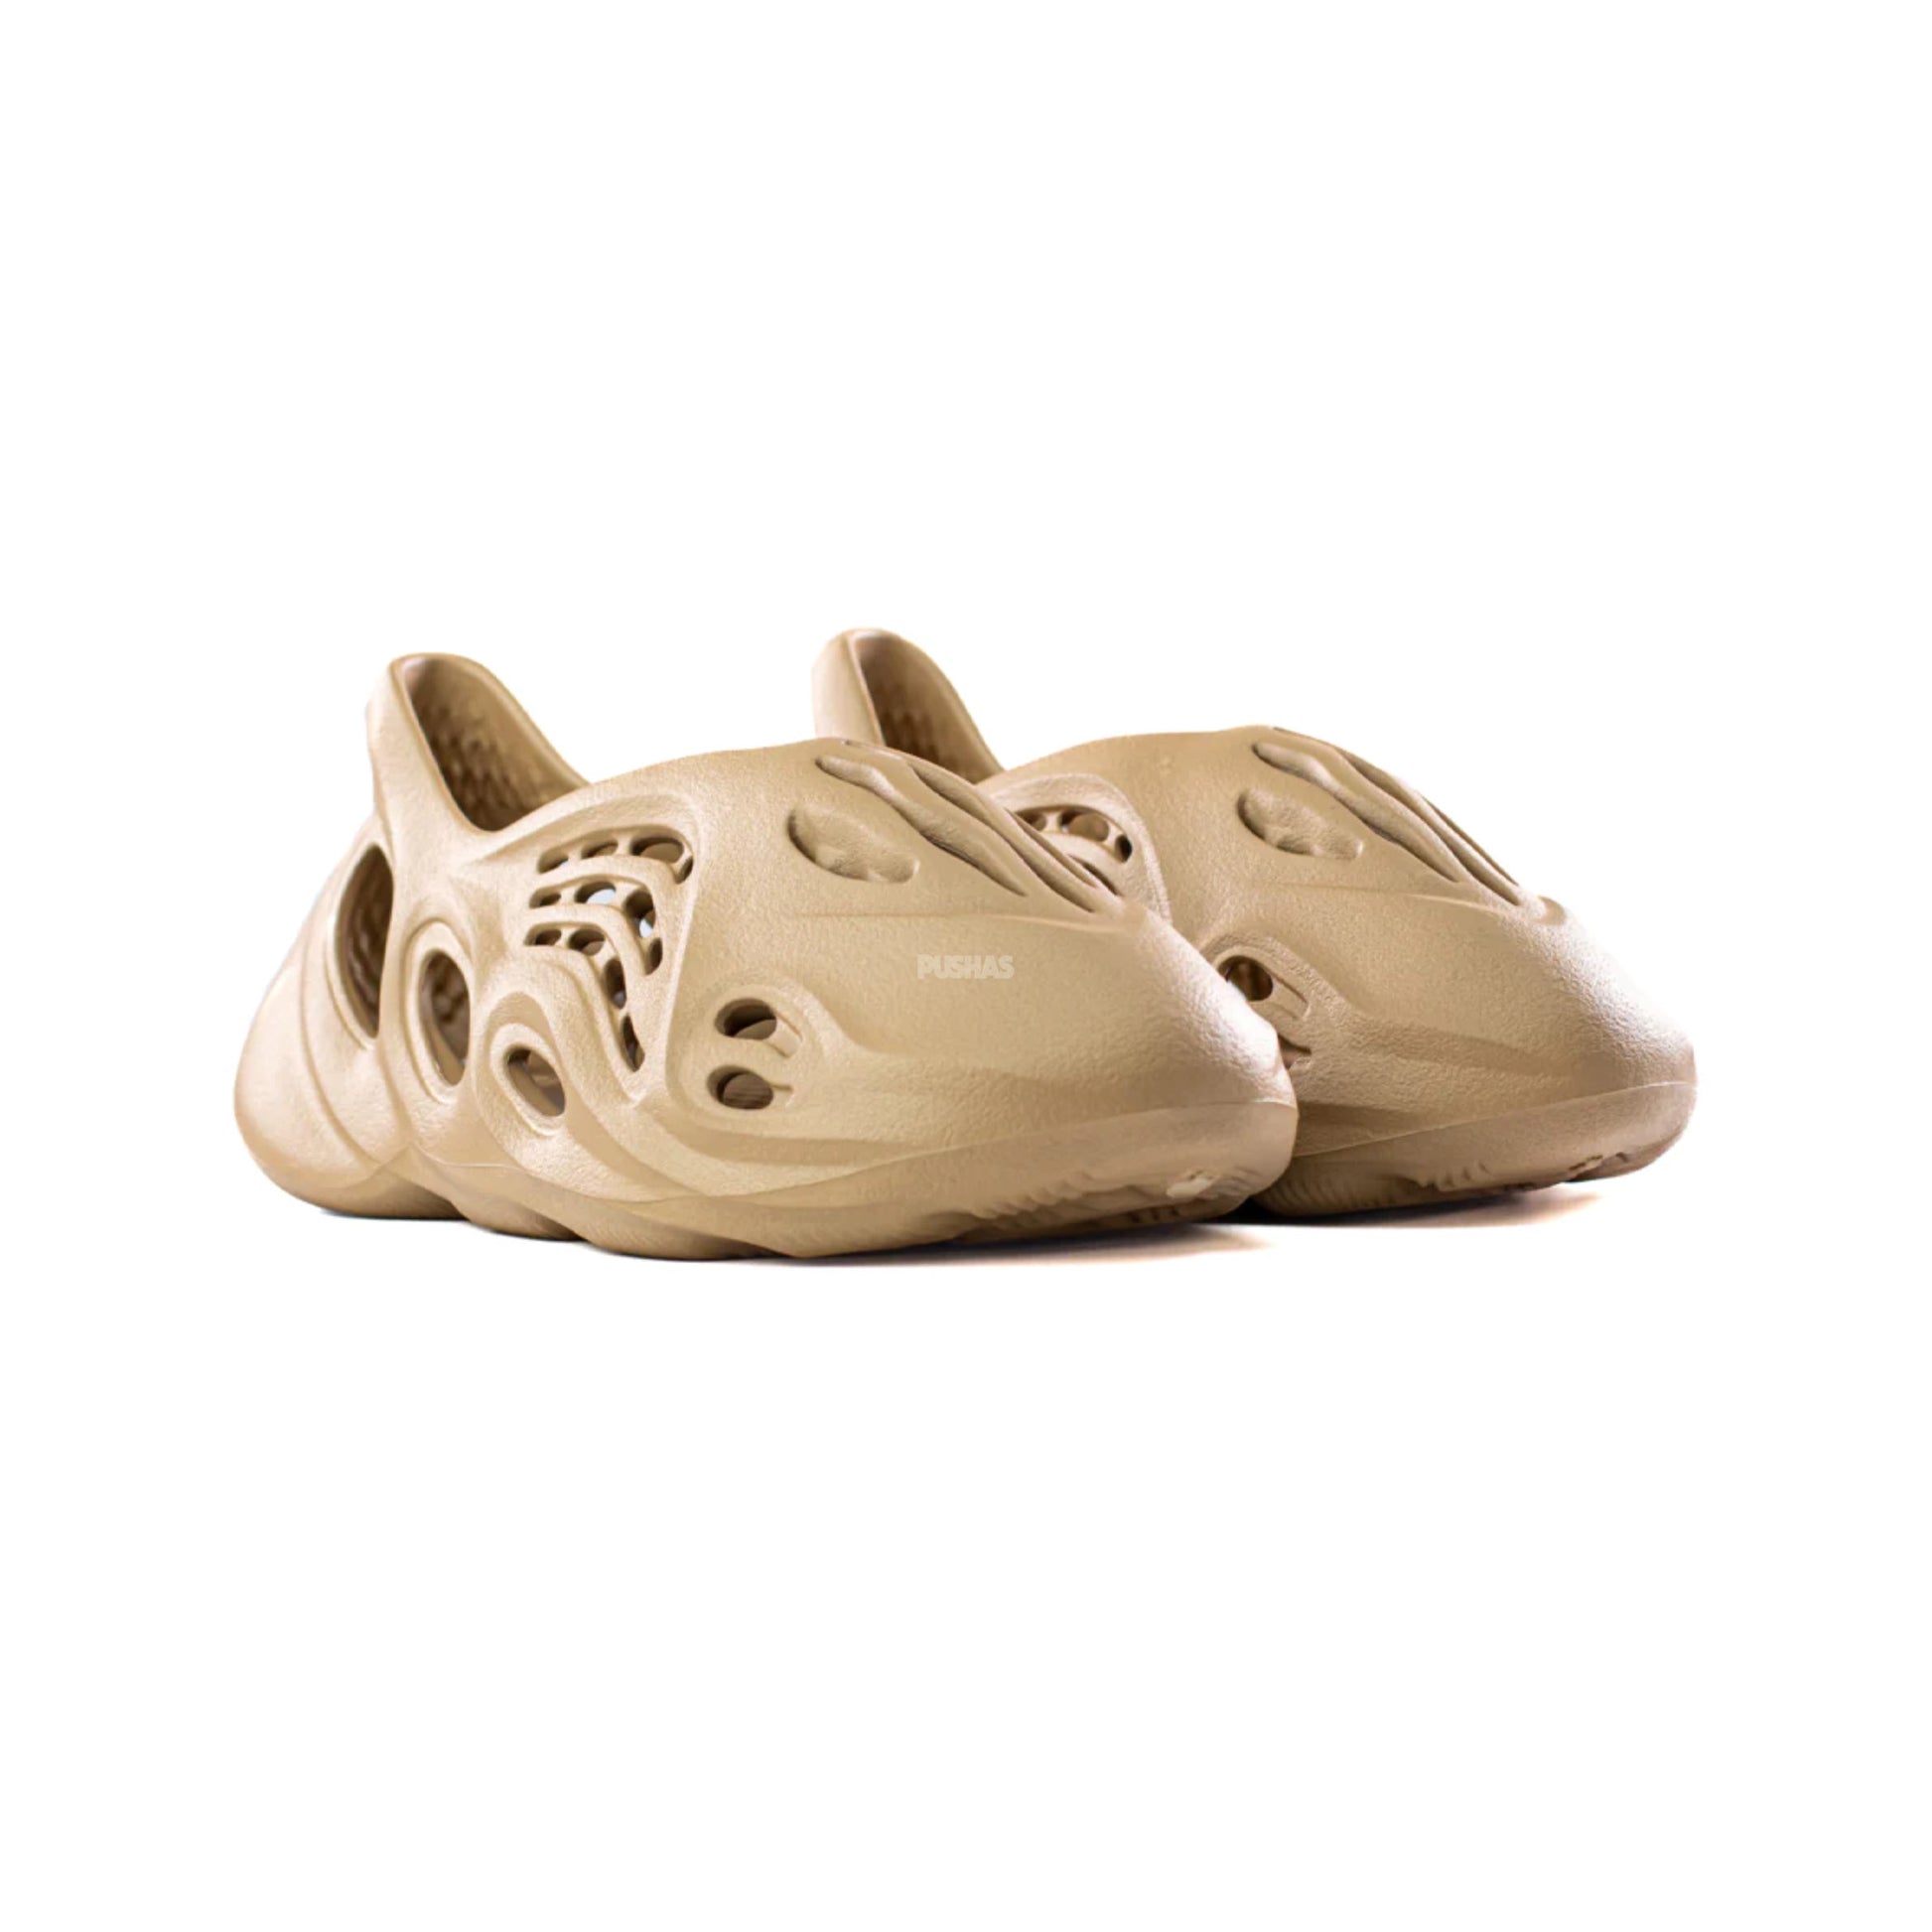 Adidas Yeezy Foam Runner 'Clay Taupe' (2023) – PUSHAS